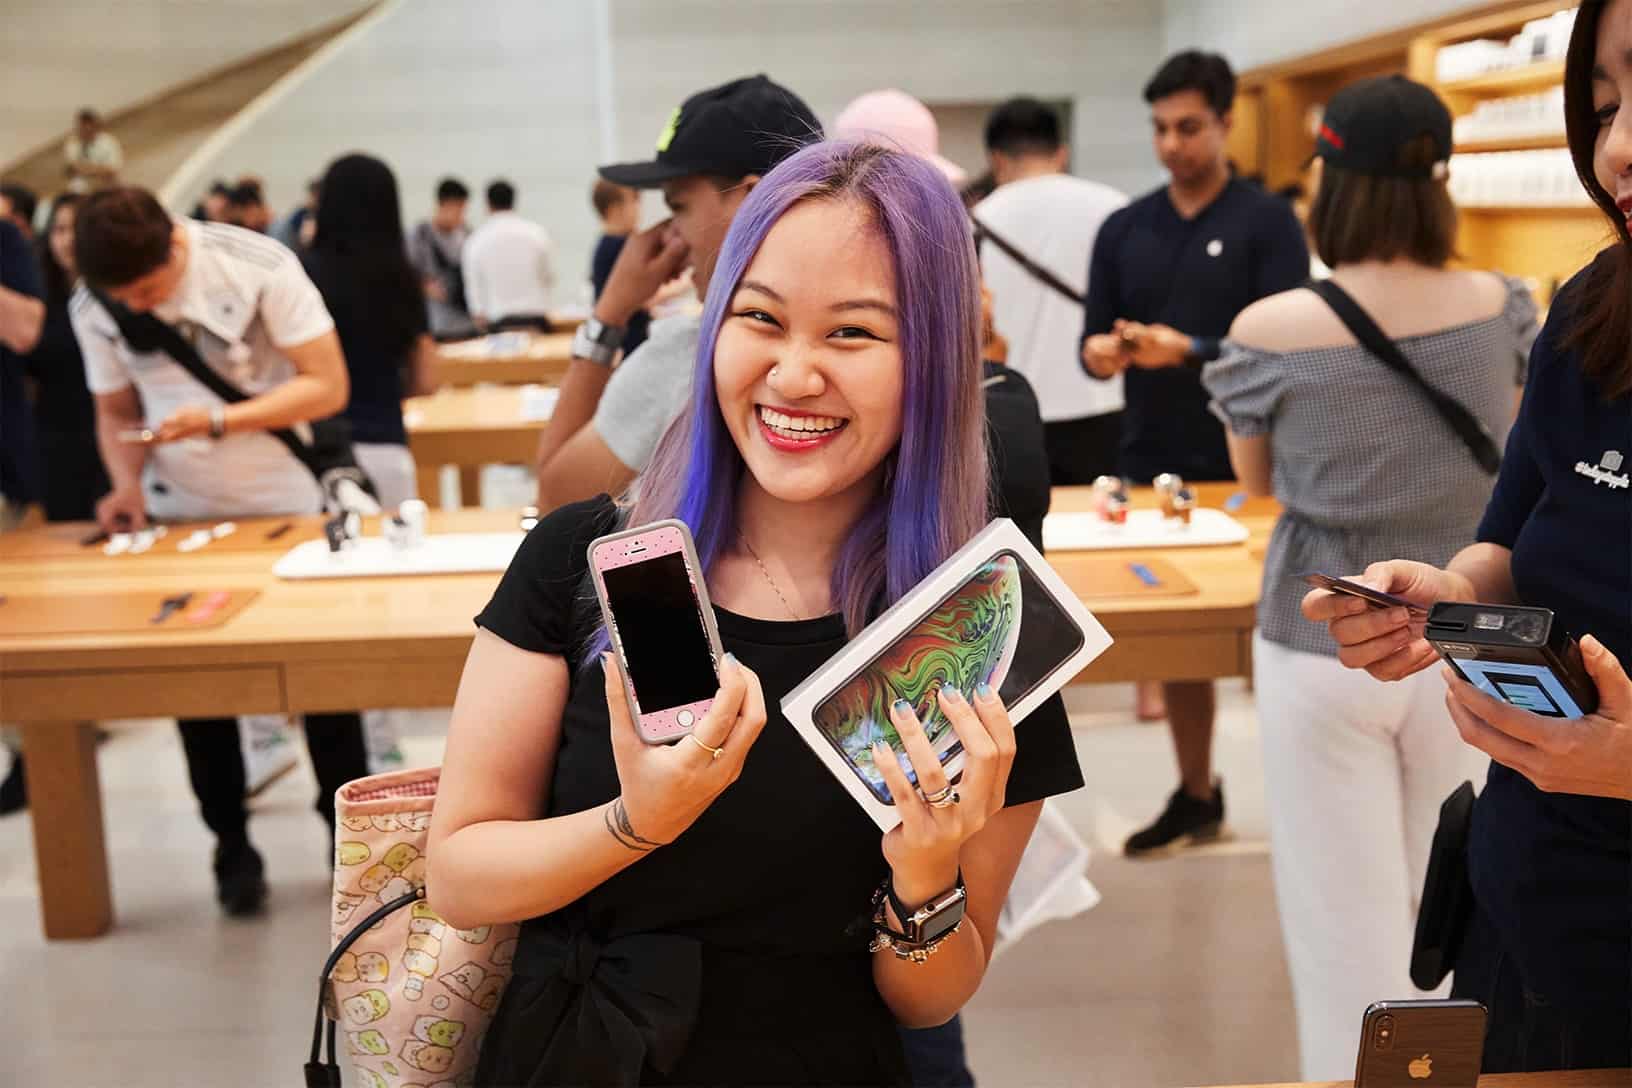 iPhone-Xs-Apple-Watch-Series-4-Availability_OrchardRd-Singapore-iPhoneXS-customer_09202018.jpg